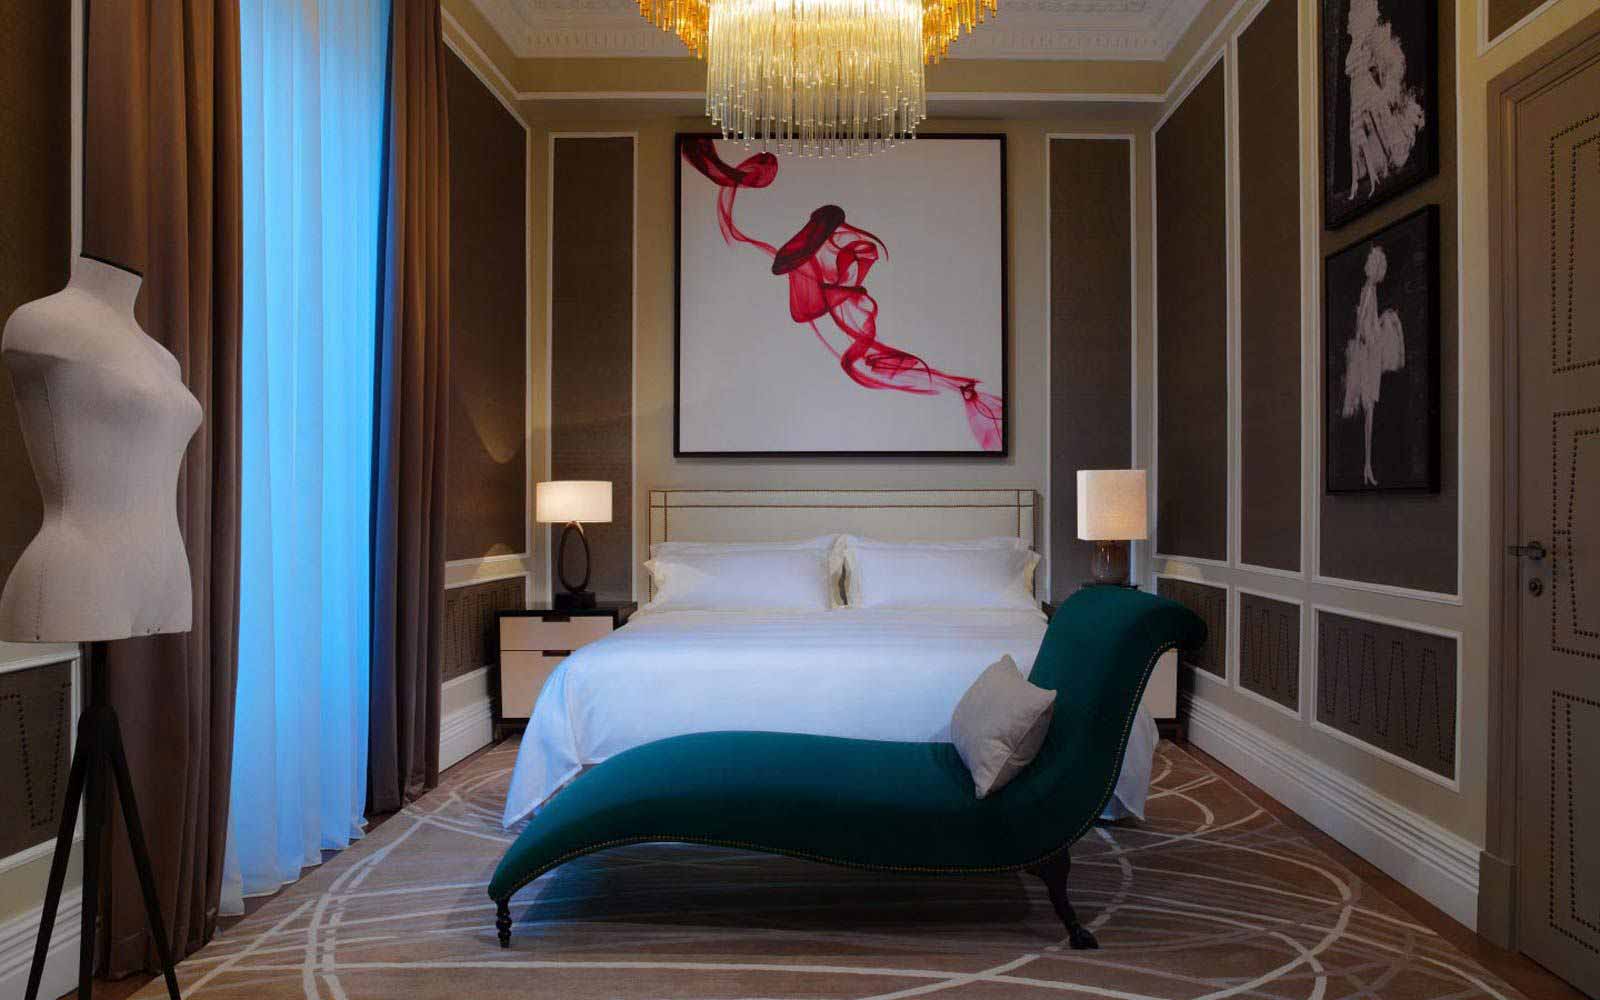 Ambassador Couture suite bedroom at St.Regis Grand Hotel